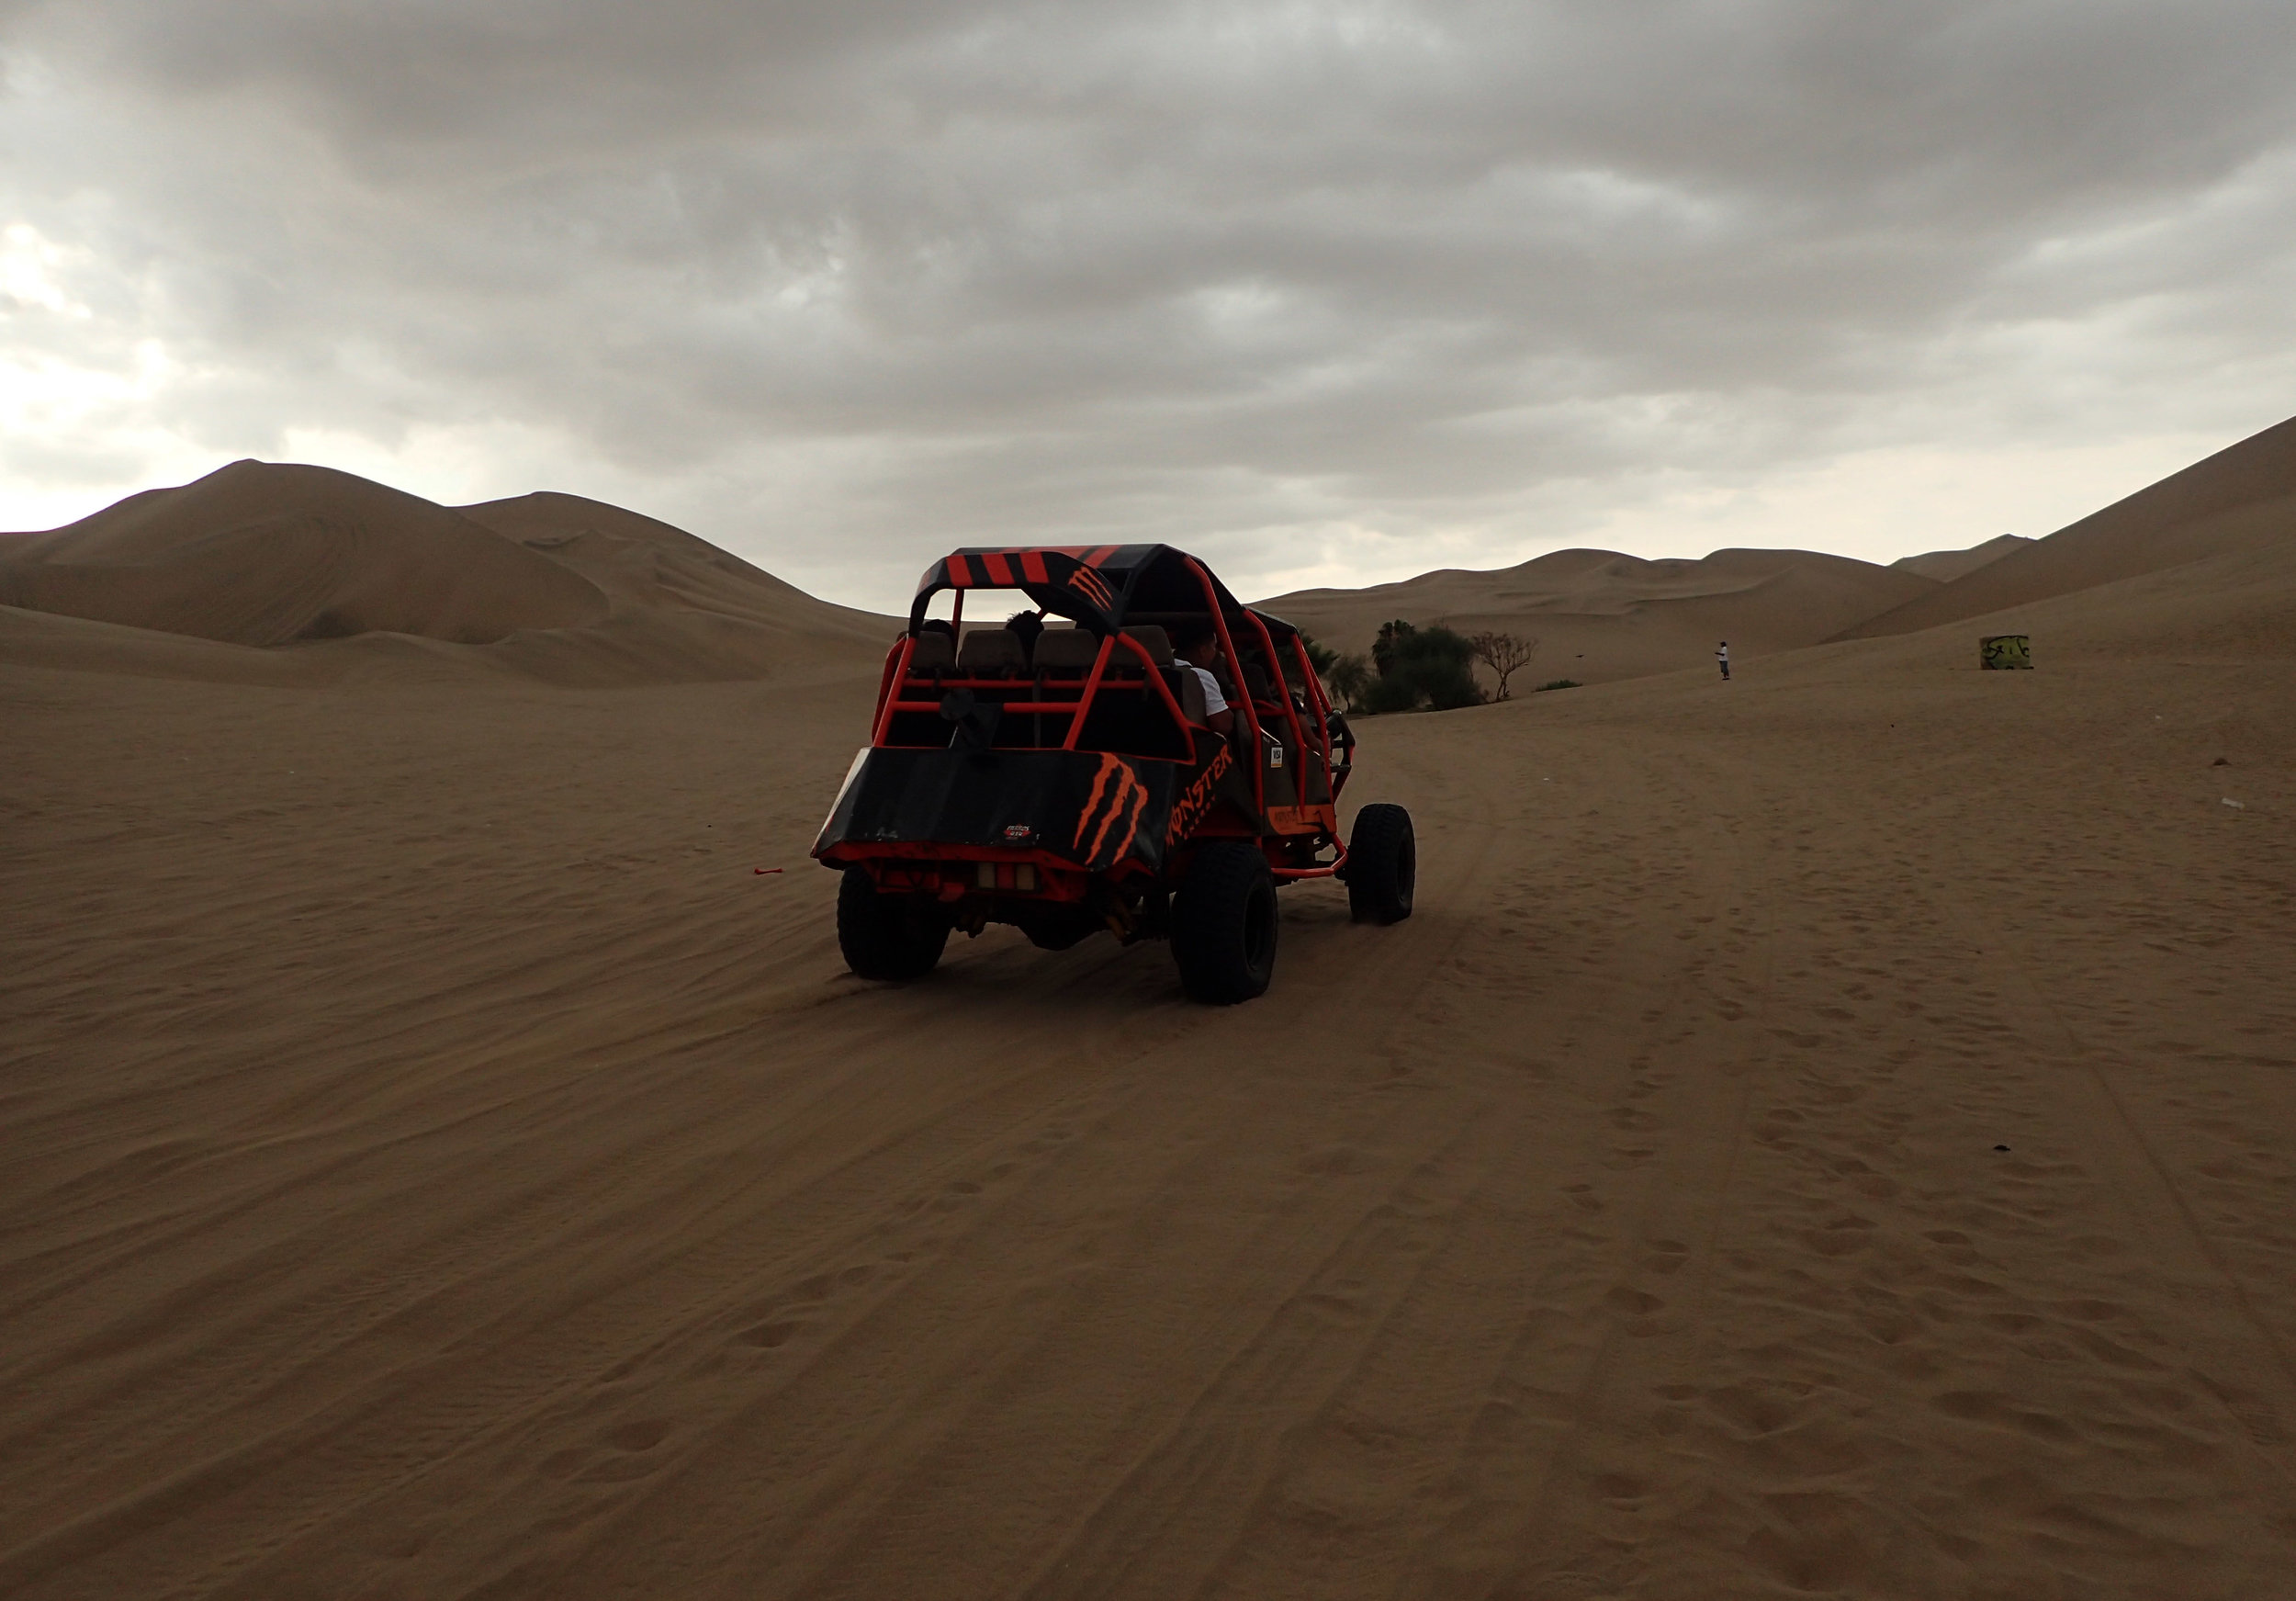 dune buggy.jpg